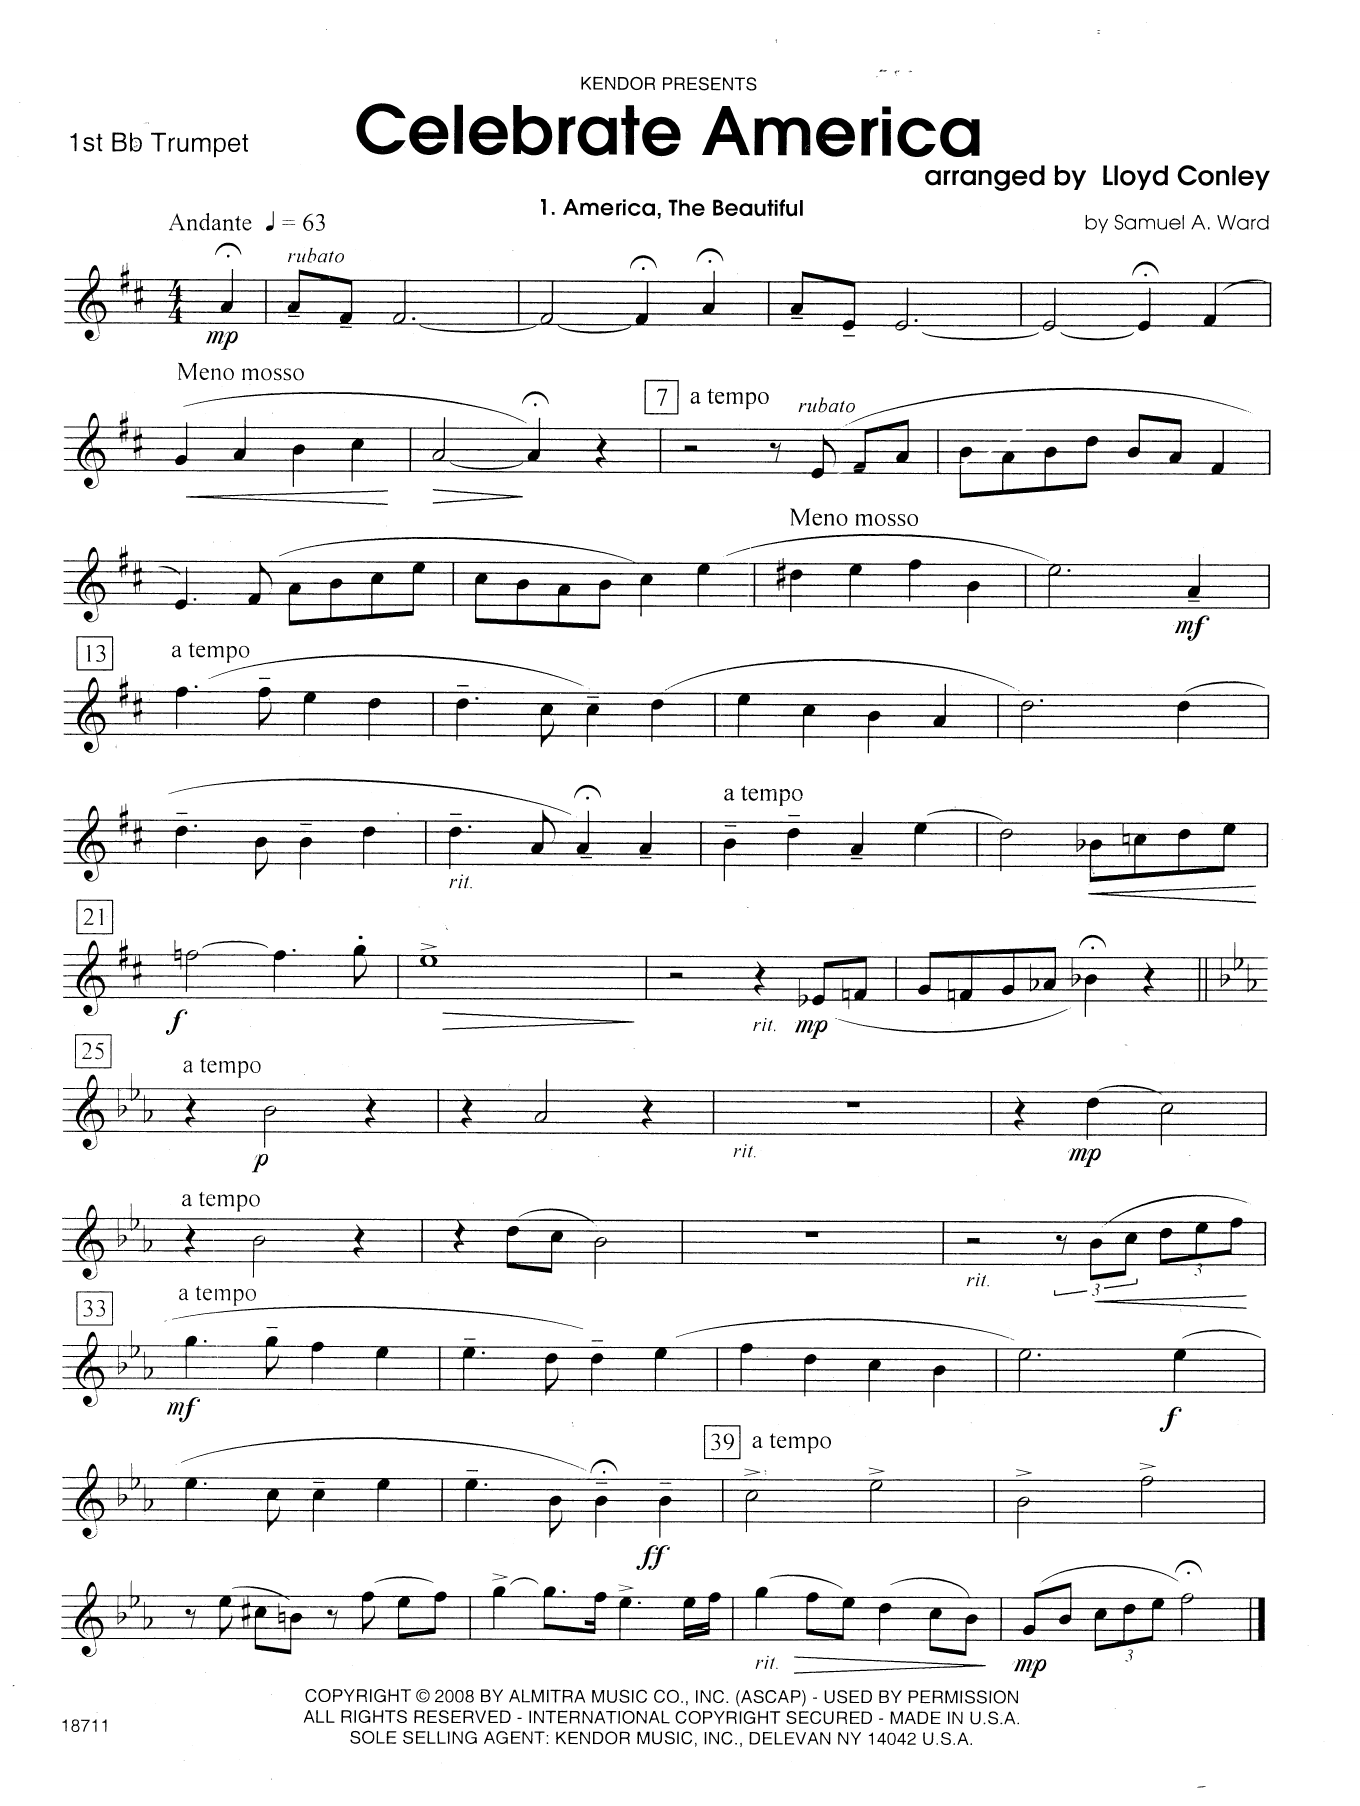 Download Lloyd Conley Celebrate America - 1st Bb Trumpet Sheet Music